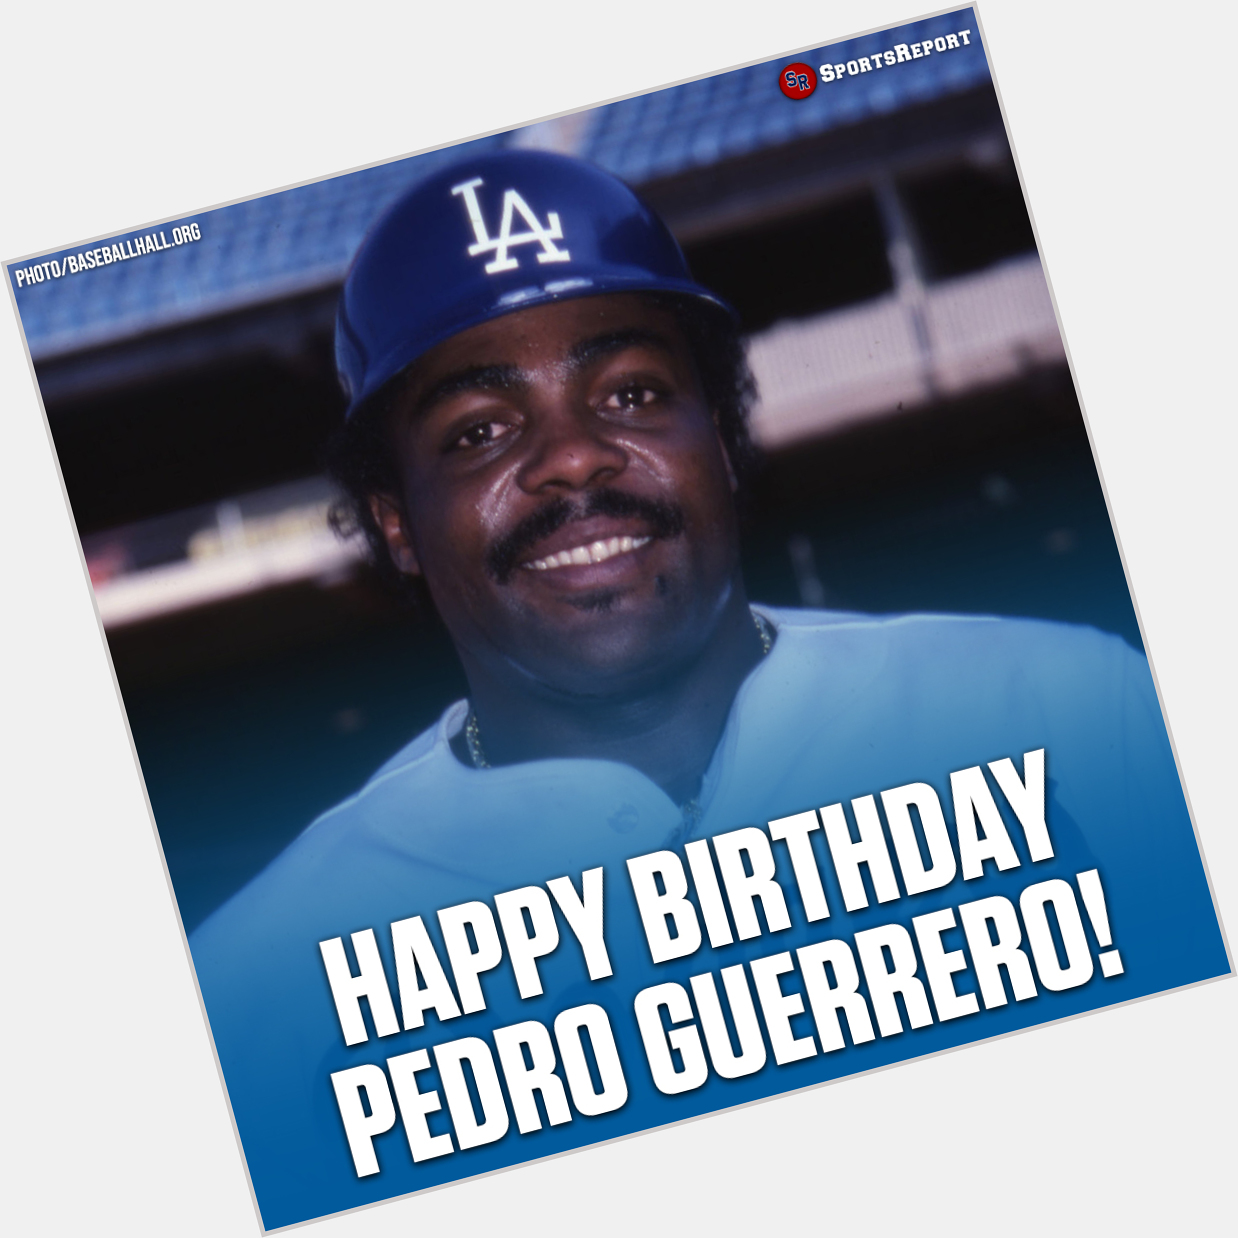 Dodgers Fans, let\s wish great Pedro Guerrero a Happy Birthday! 